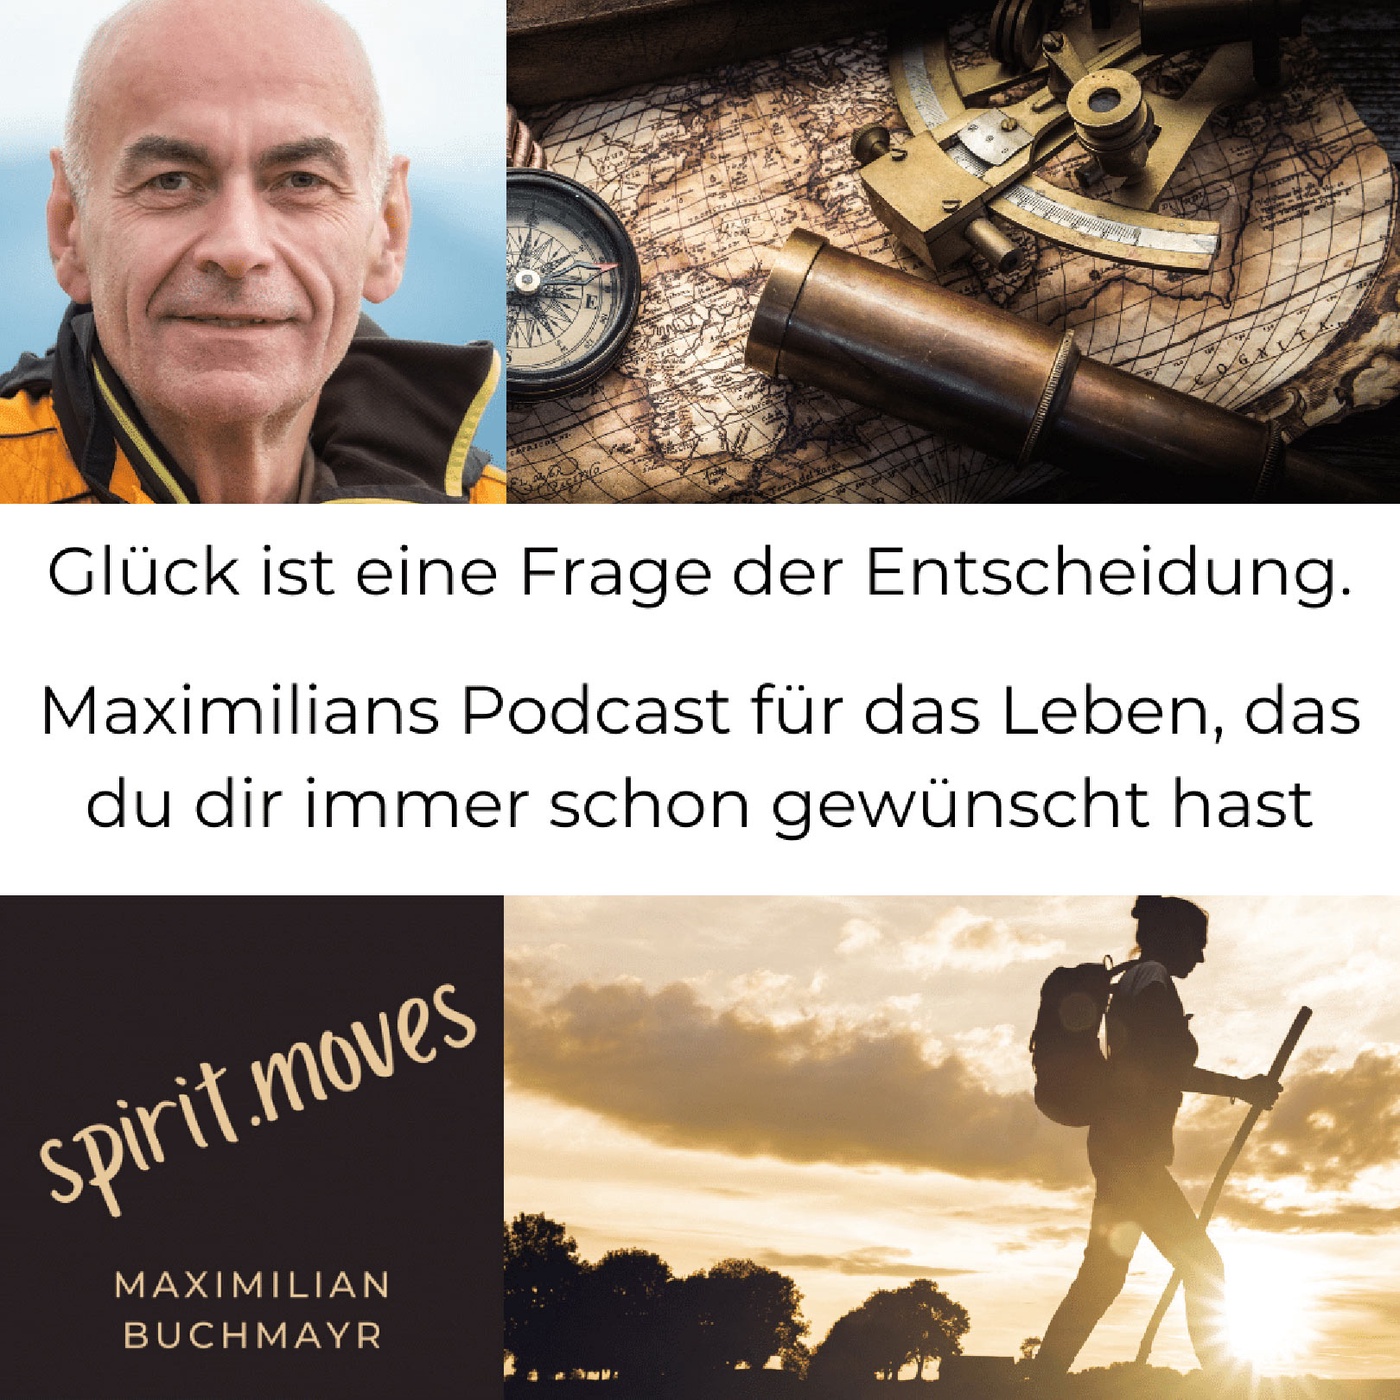 Maximilian Buchmayr - spirit.moves